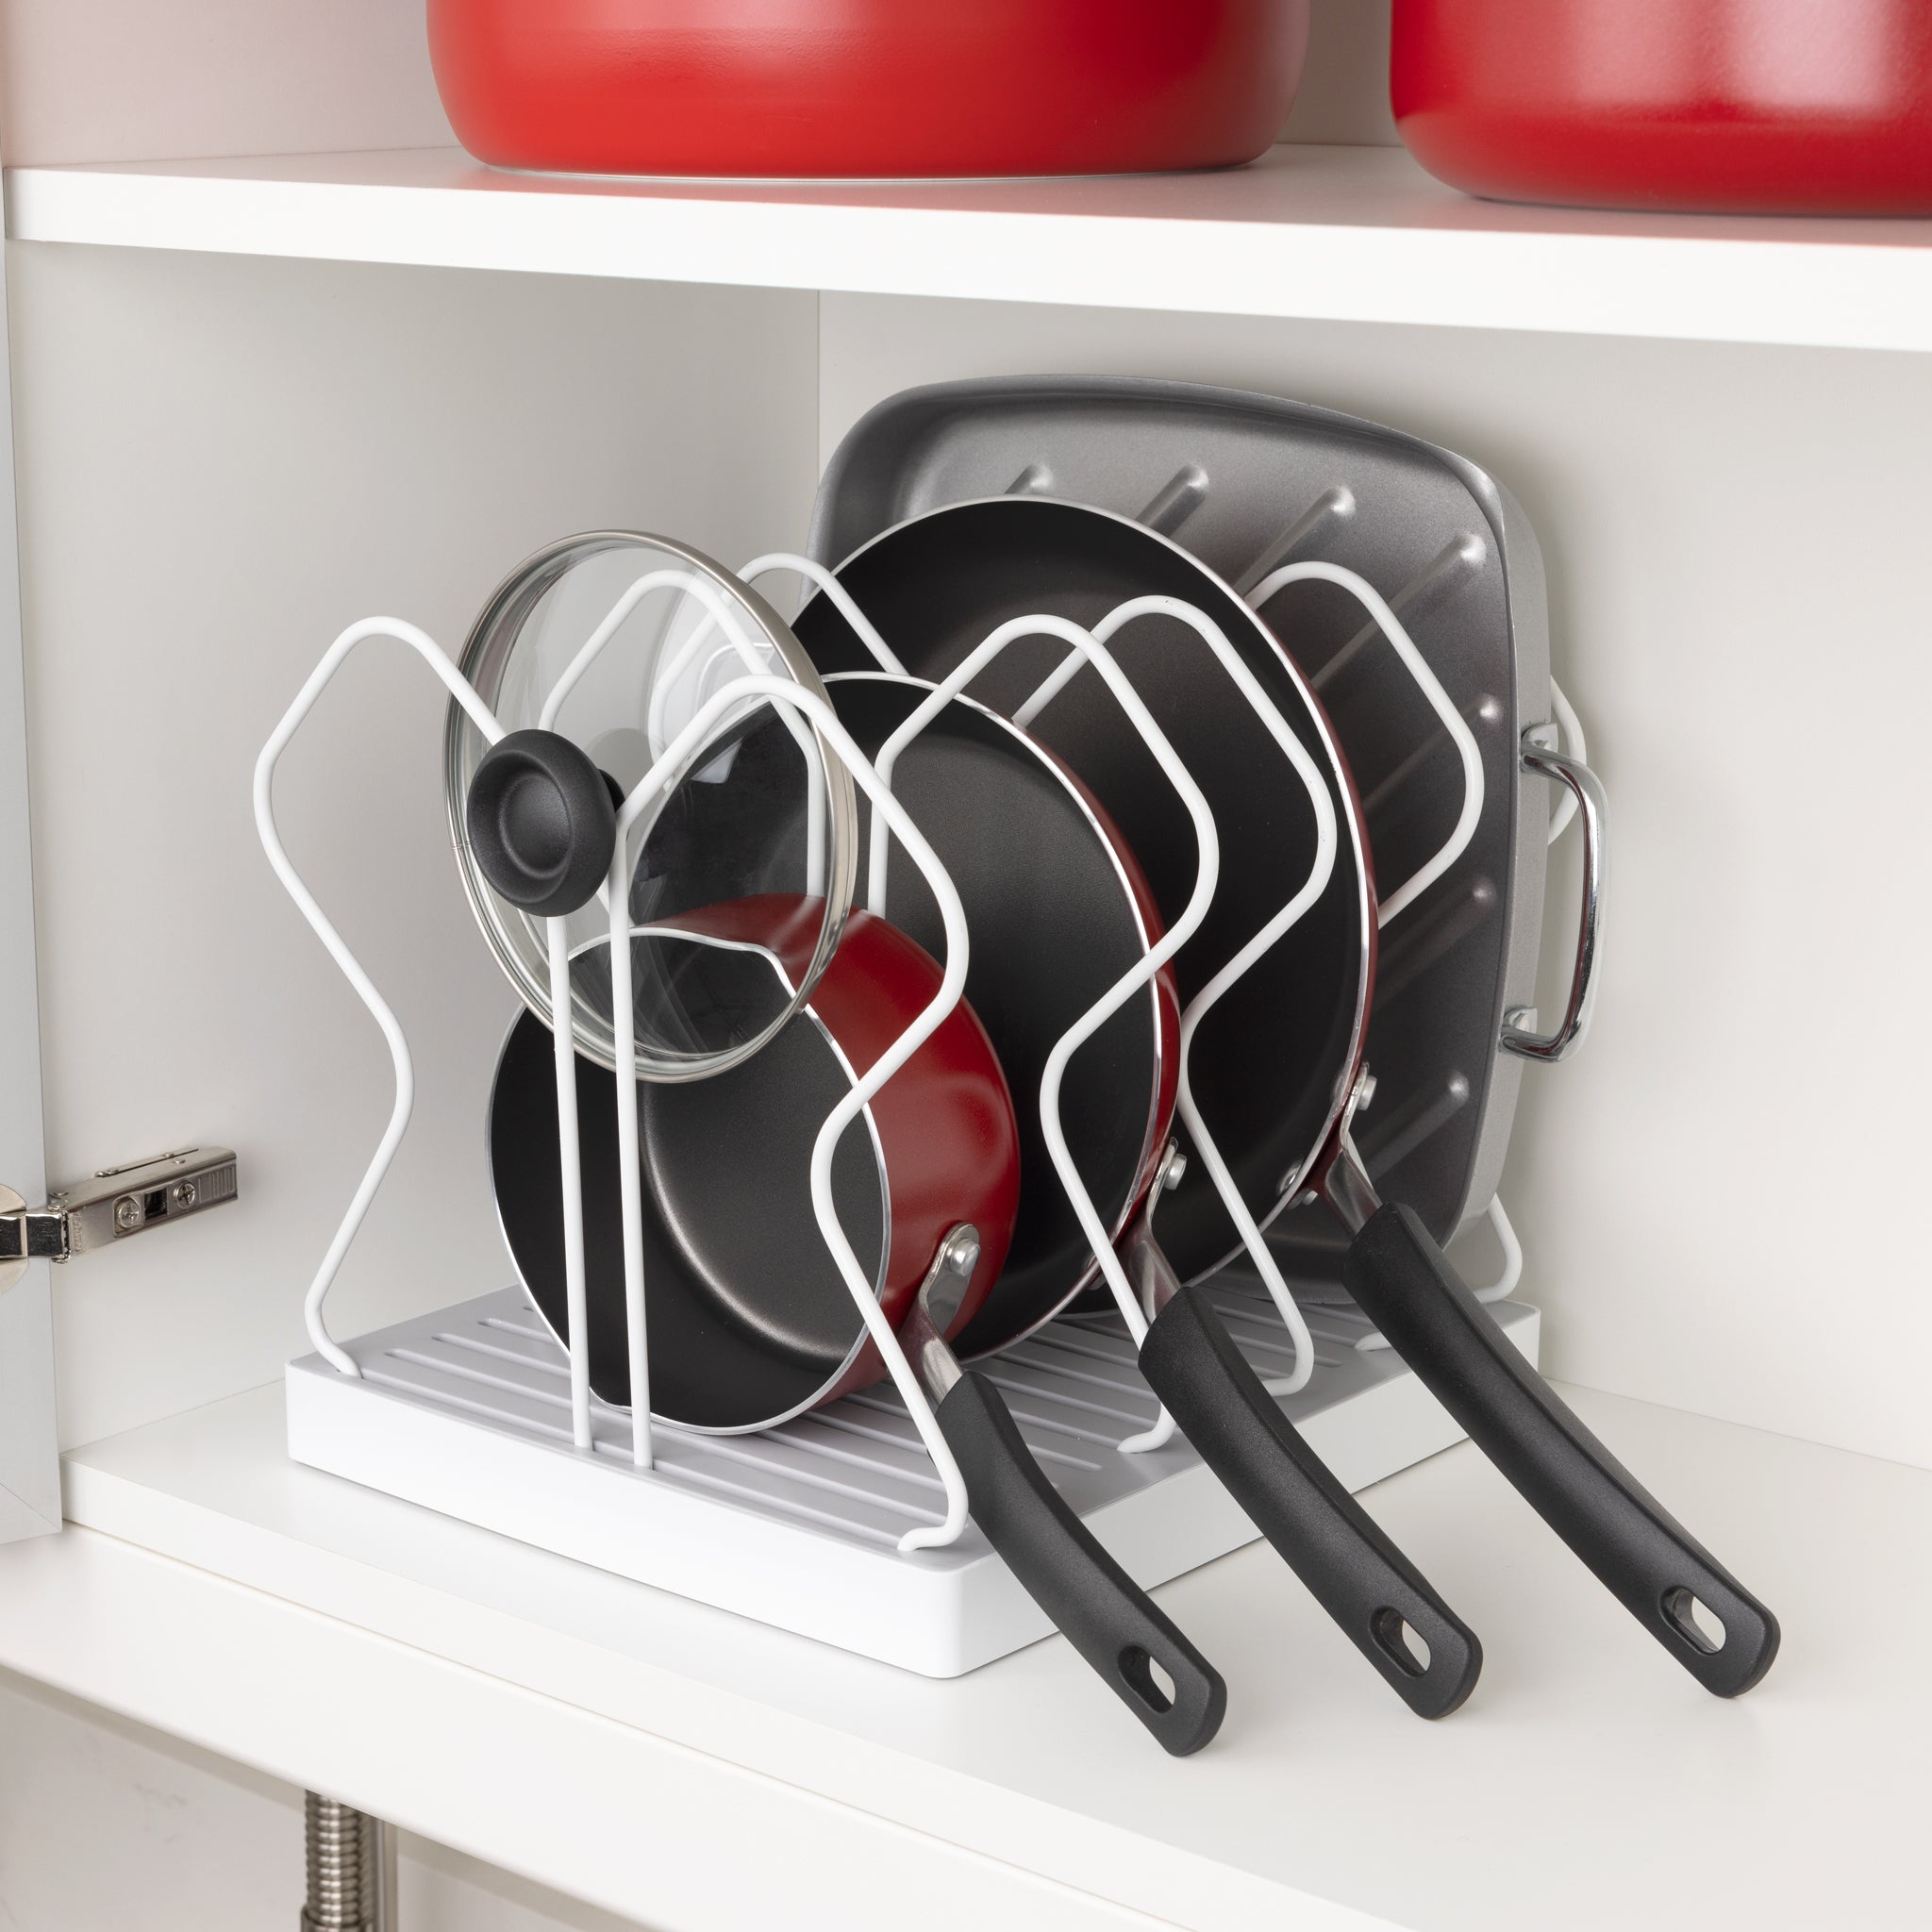 Adjustable Cookware and Lid Rack - White - Smart Design® 2